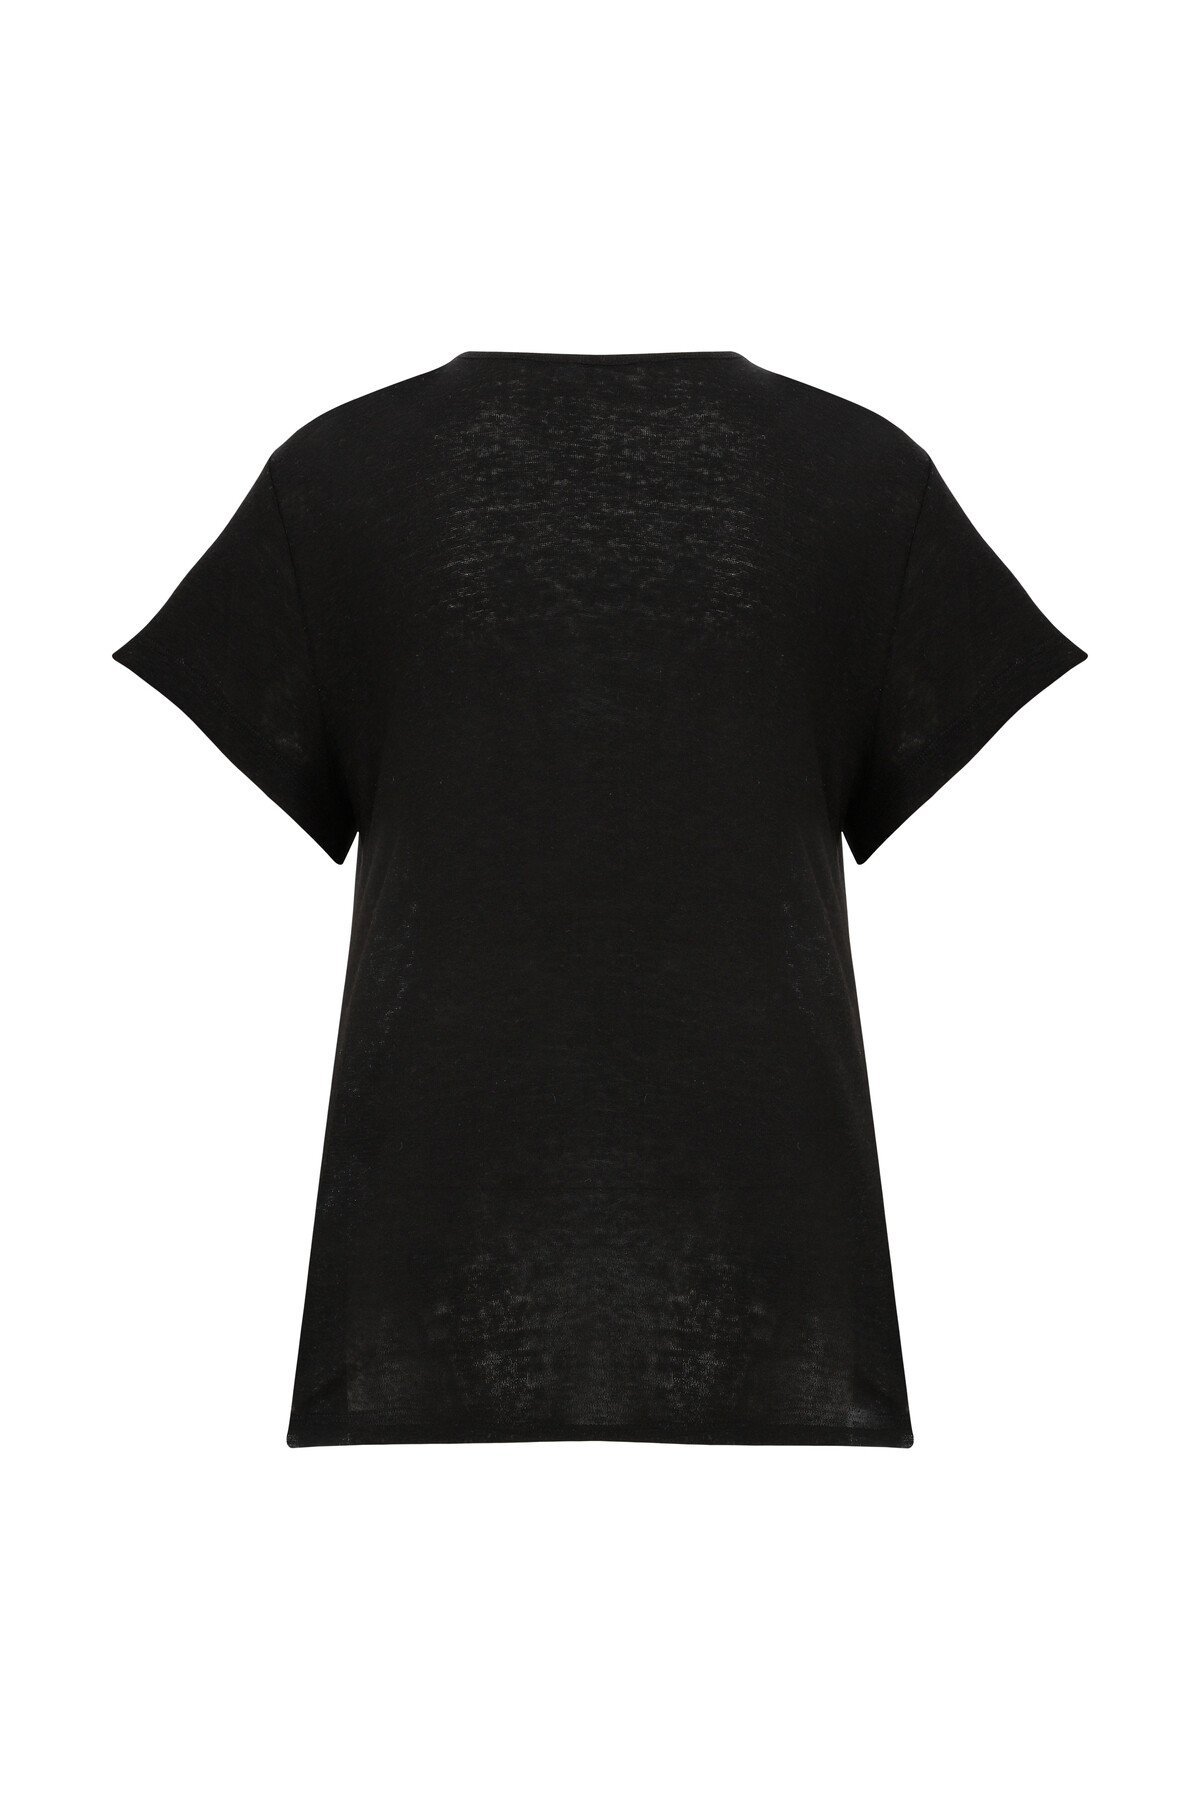 JODIE V-Neck Black T-Shirt